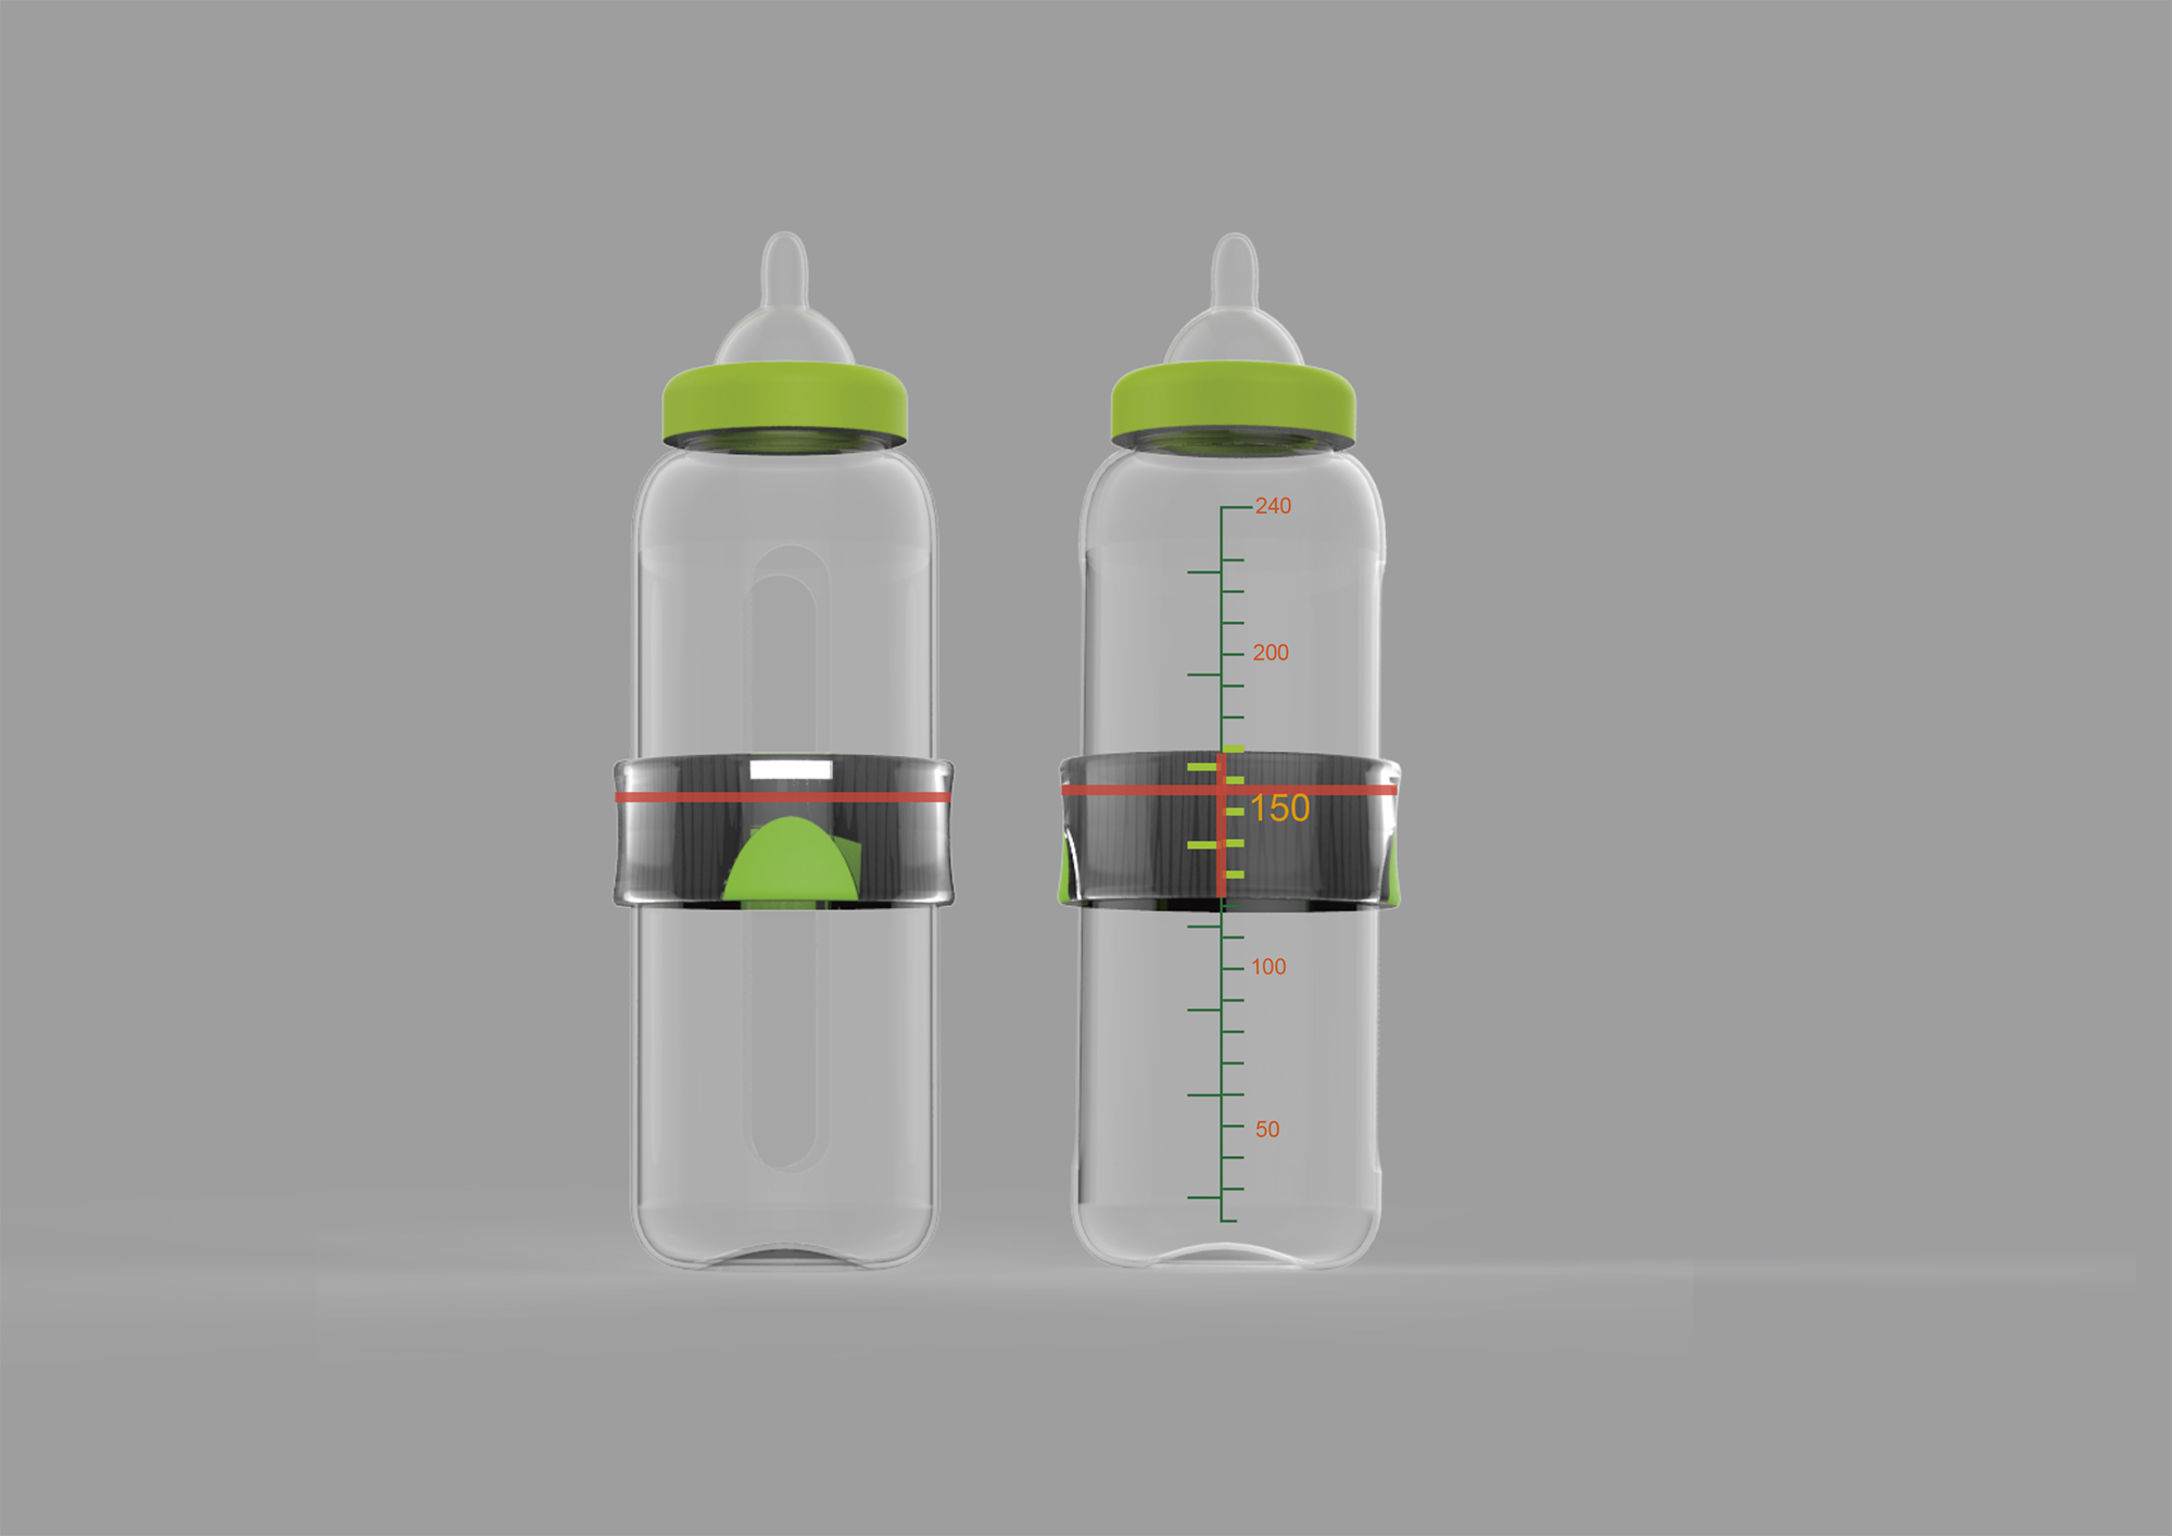 smart baby bottle